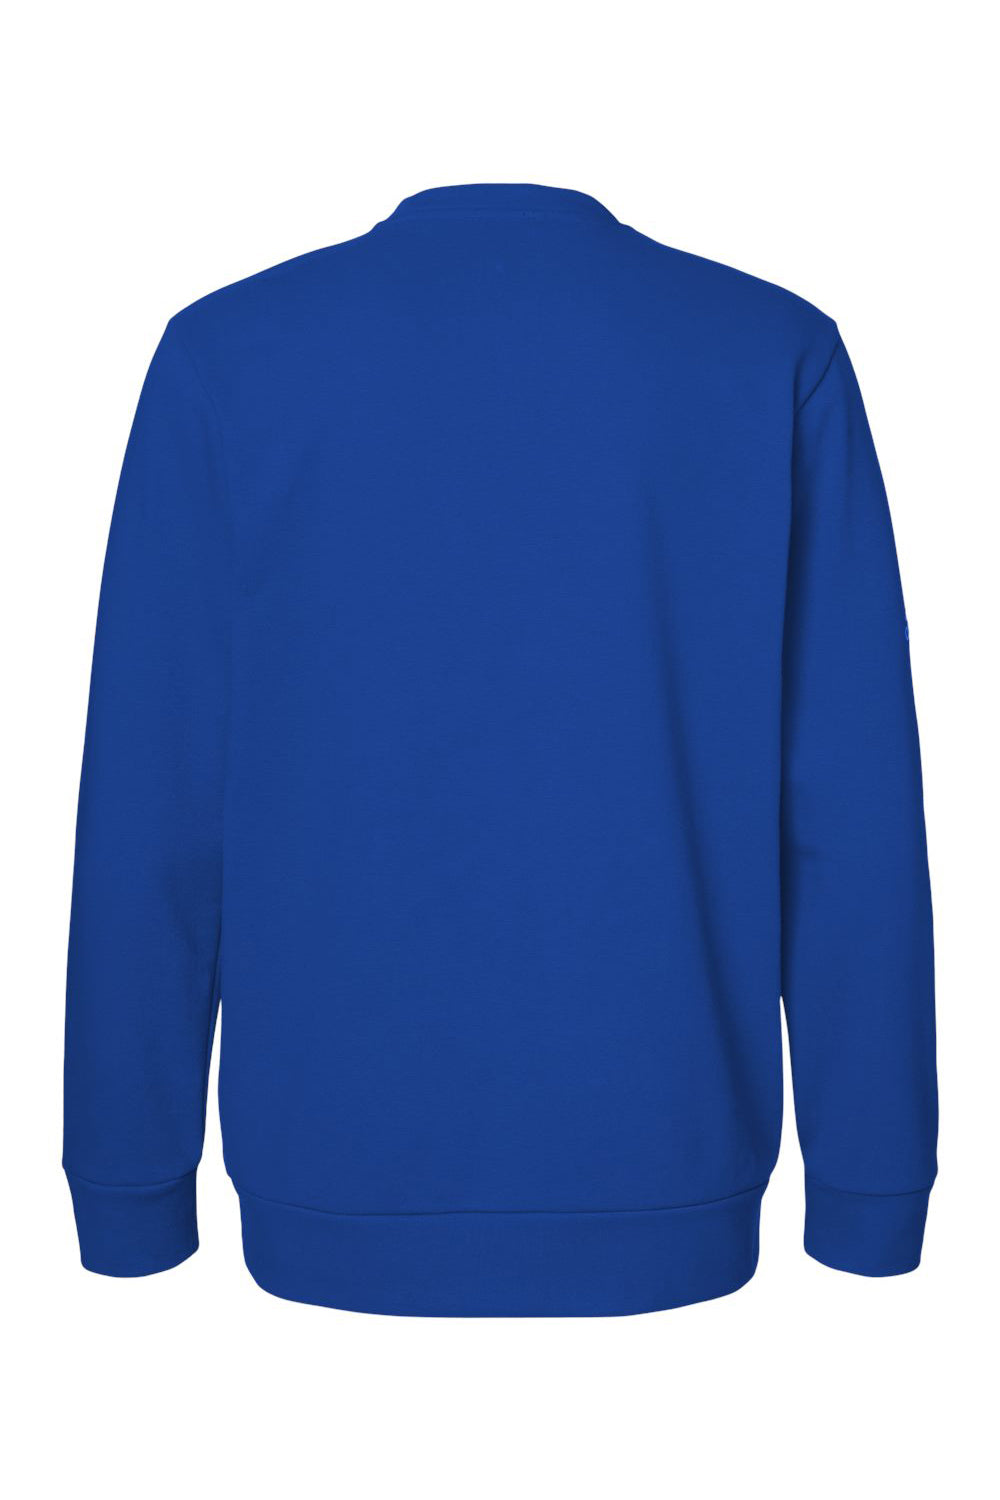 Adidas A434 Mens Fleece Crewneck Sweatshirt Collegiate Royal Blue Flat Back